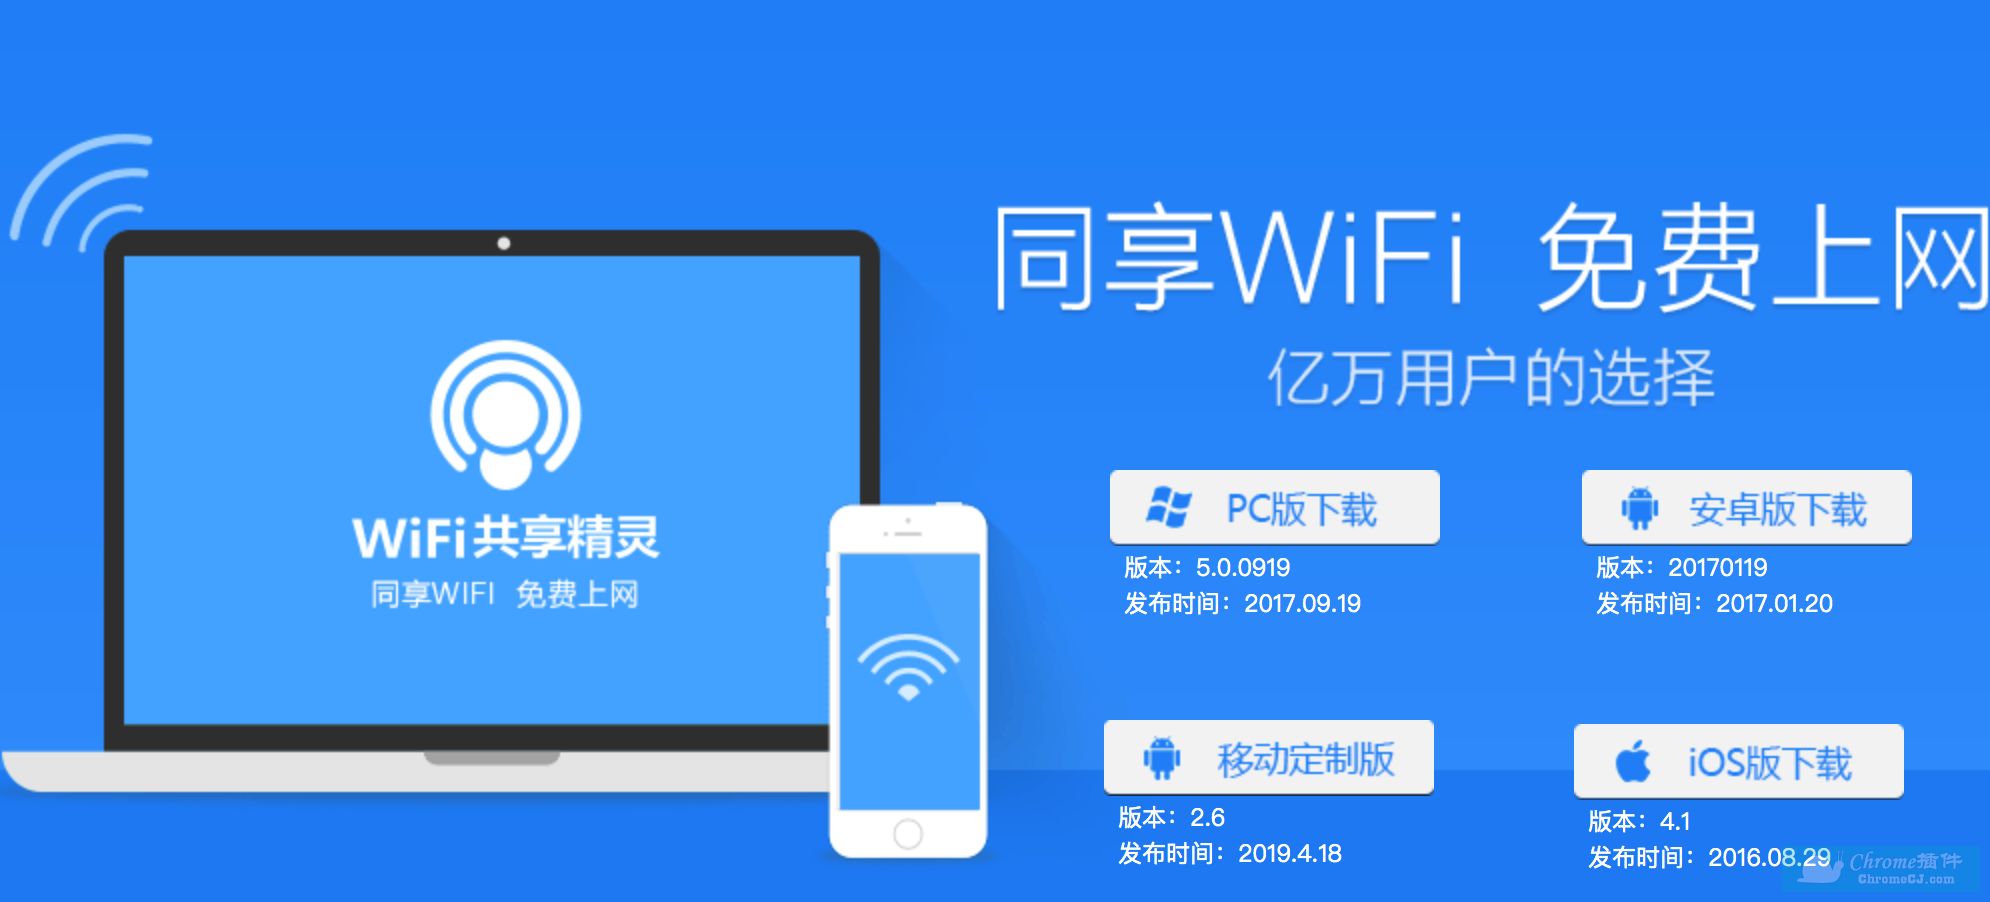 WiFi 共享精灵简介